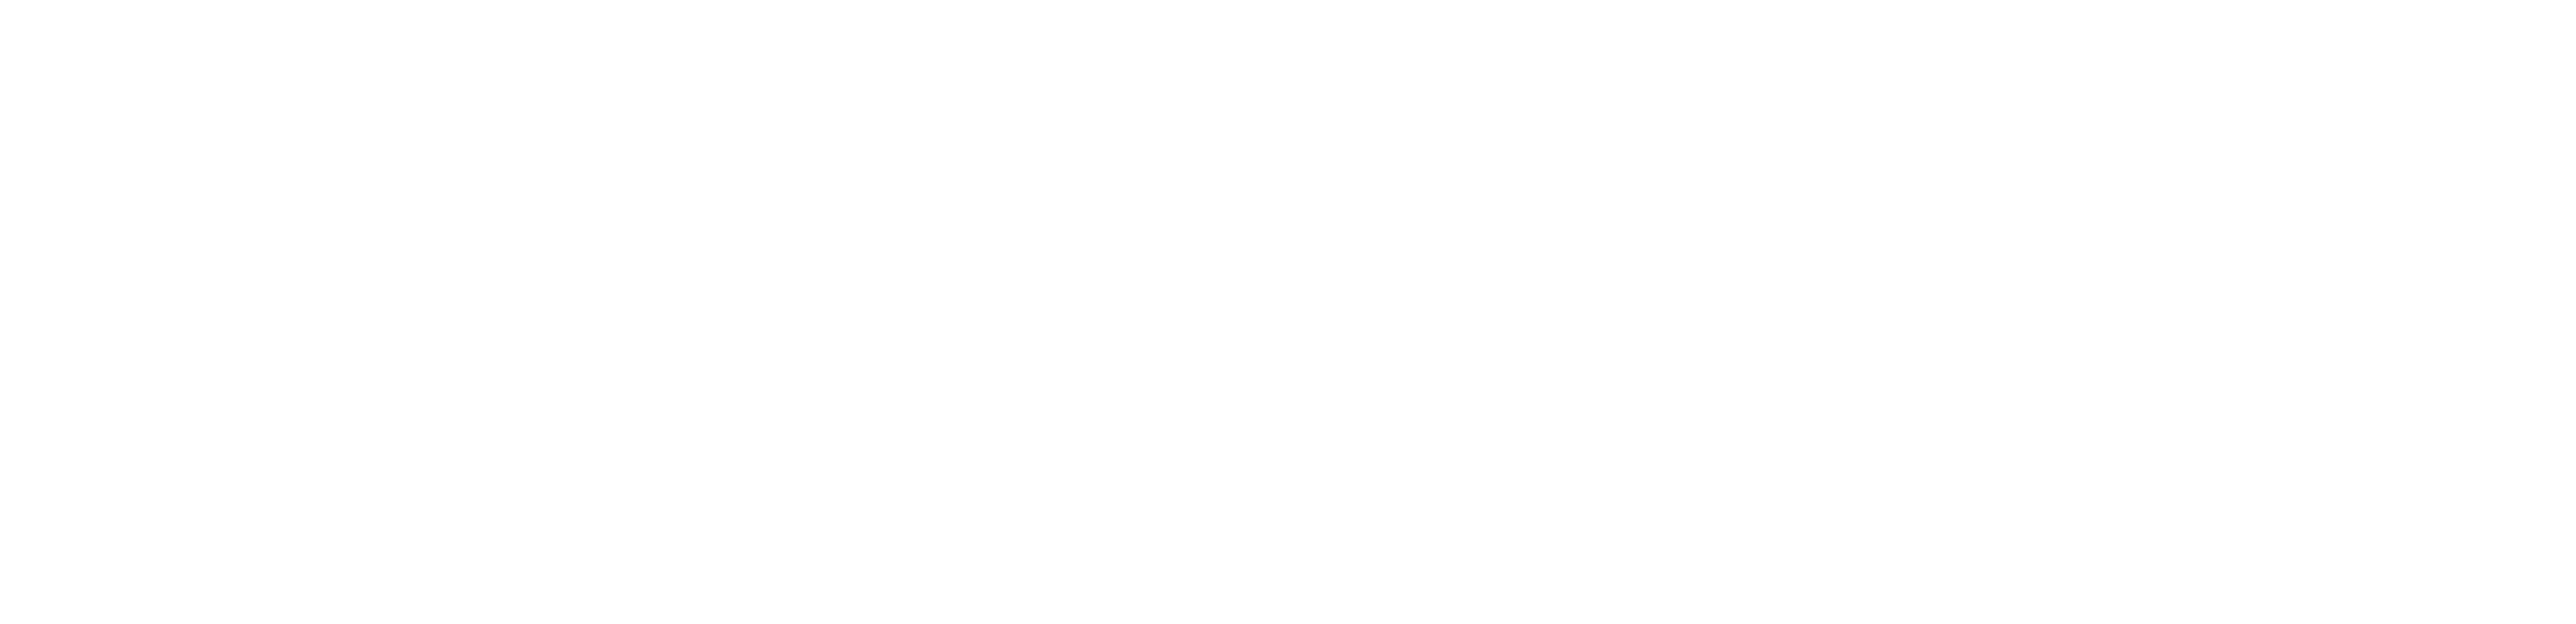 Knightsbridge Private Wealth